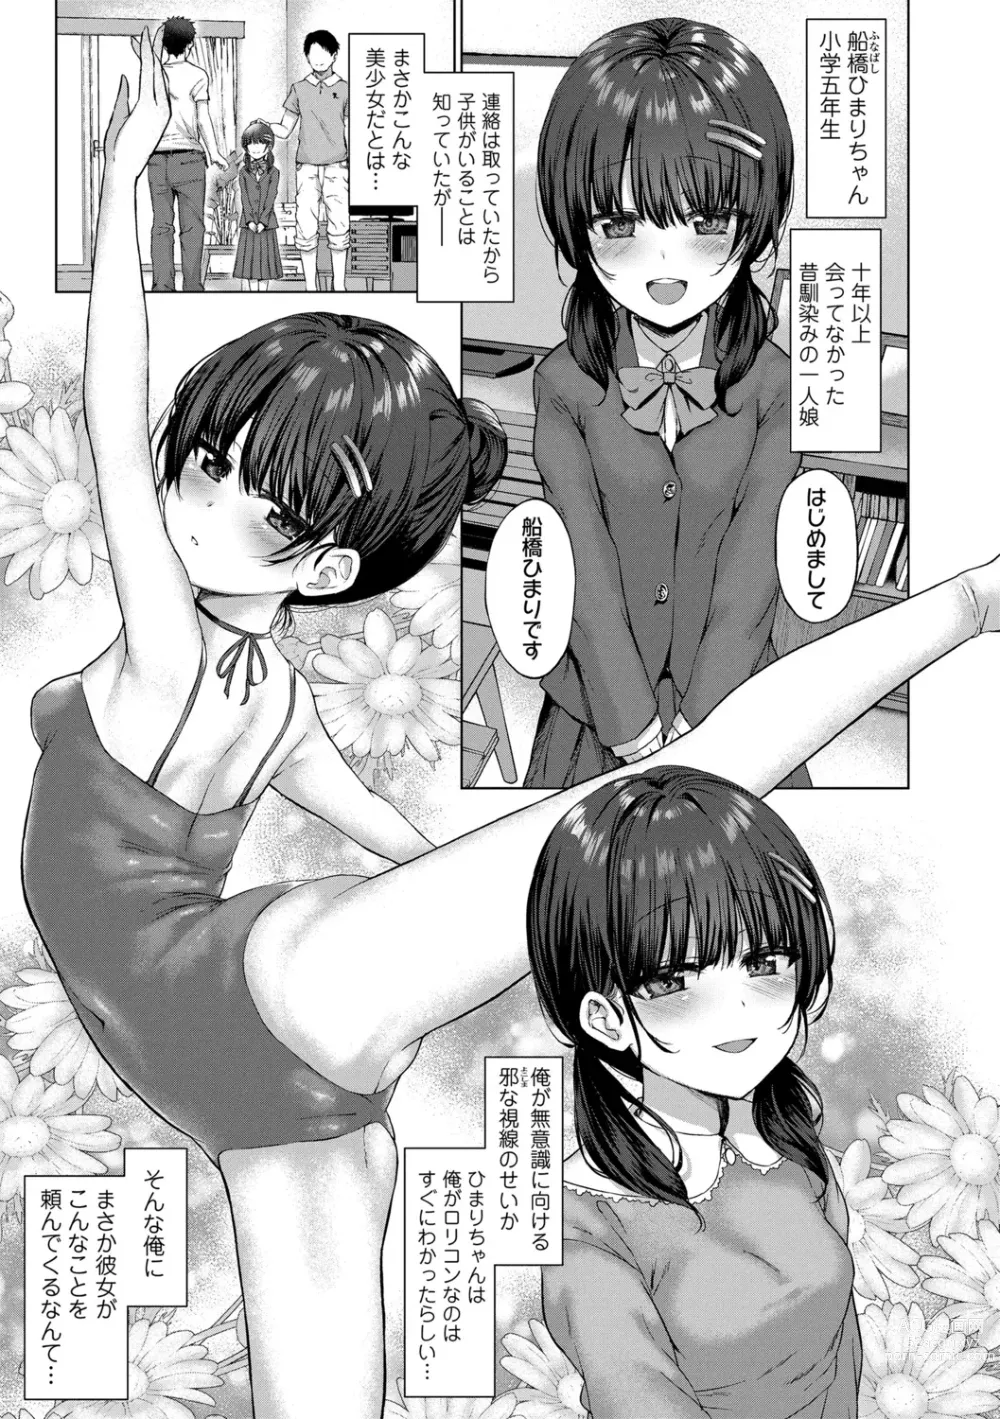 Page 5 of manga Akuma mitai ni kimi wa tatteta